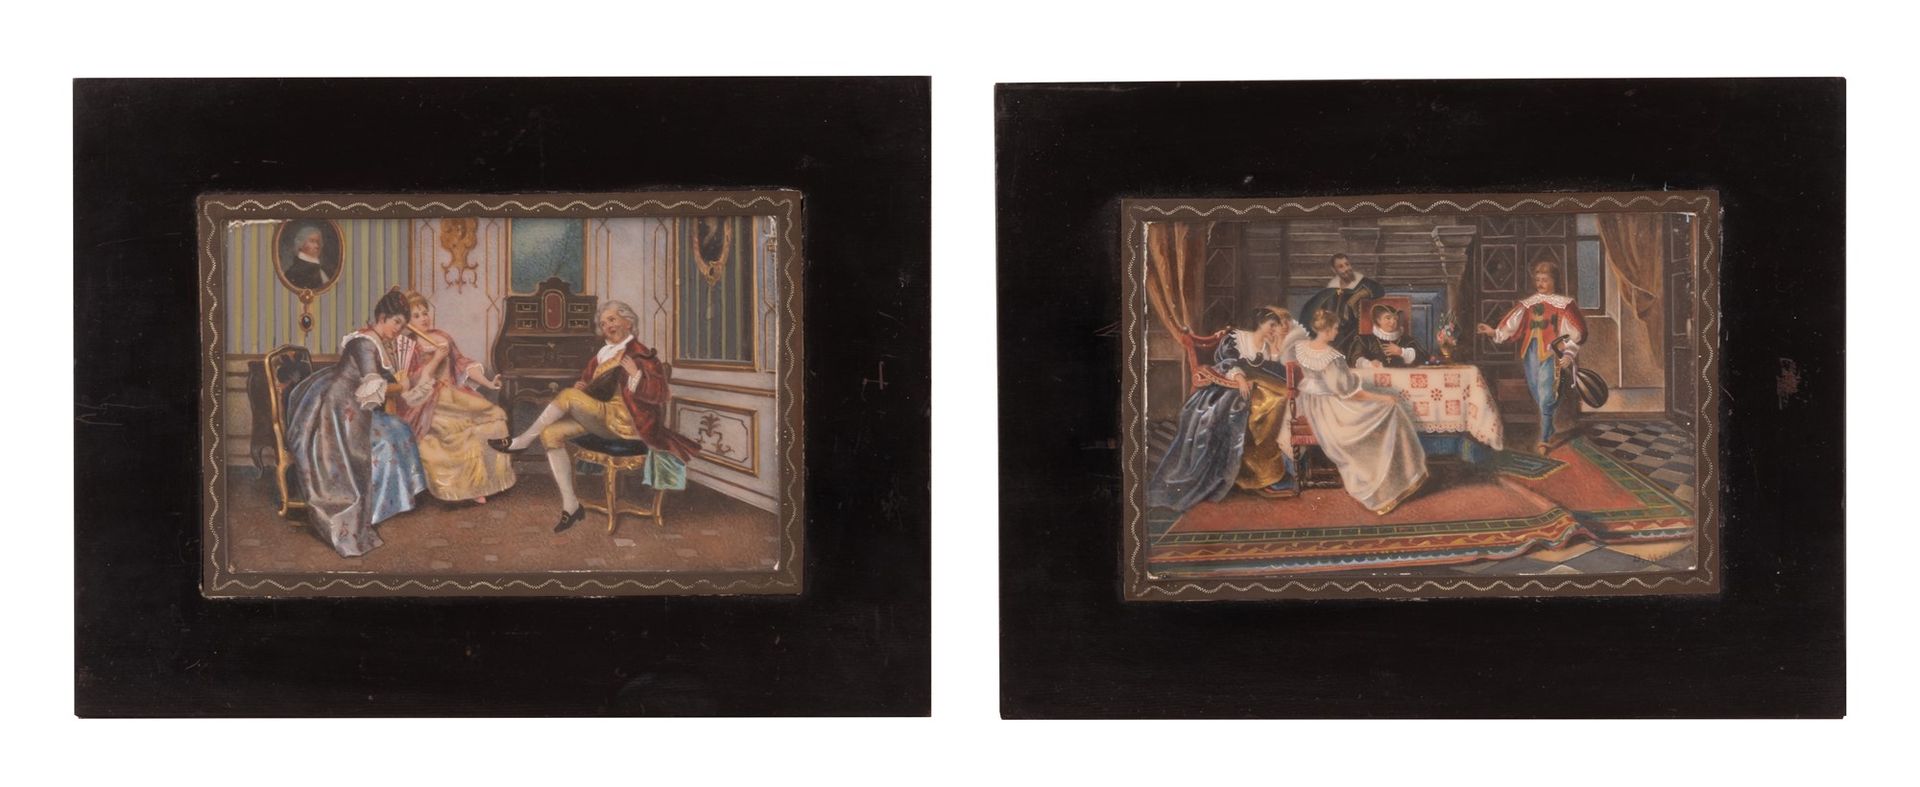 Anonimo francese del XVIII secolo ( - ) 纸上淡彩画 1) cm 11x15; 2) cm 16x21 2